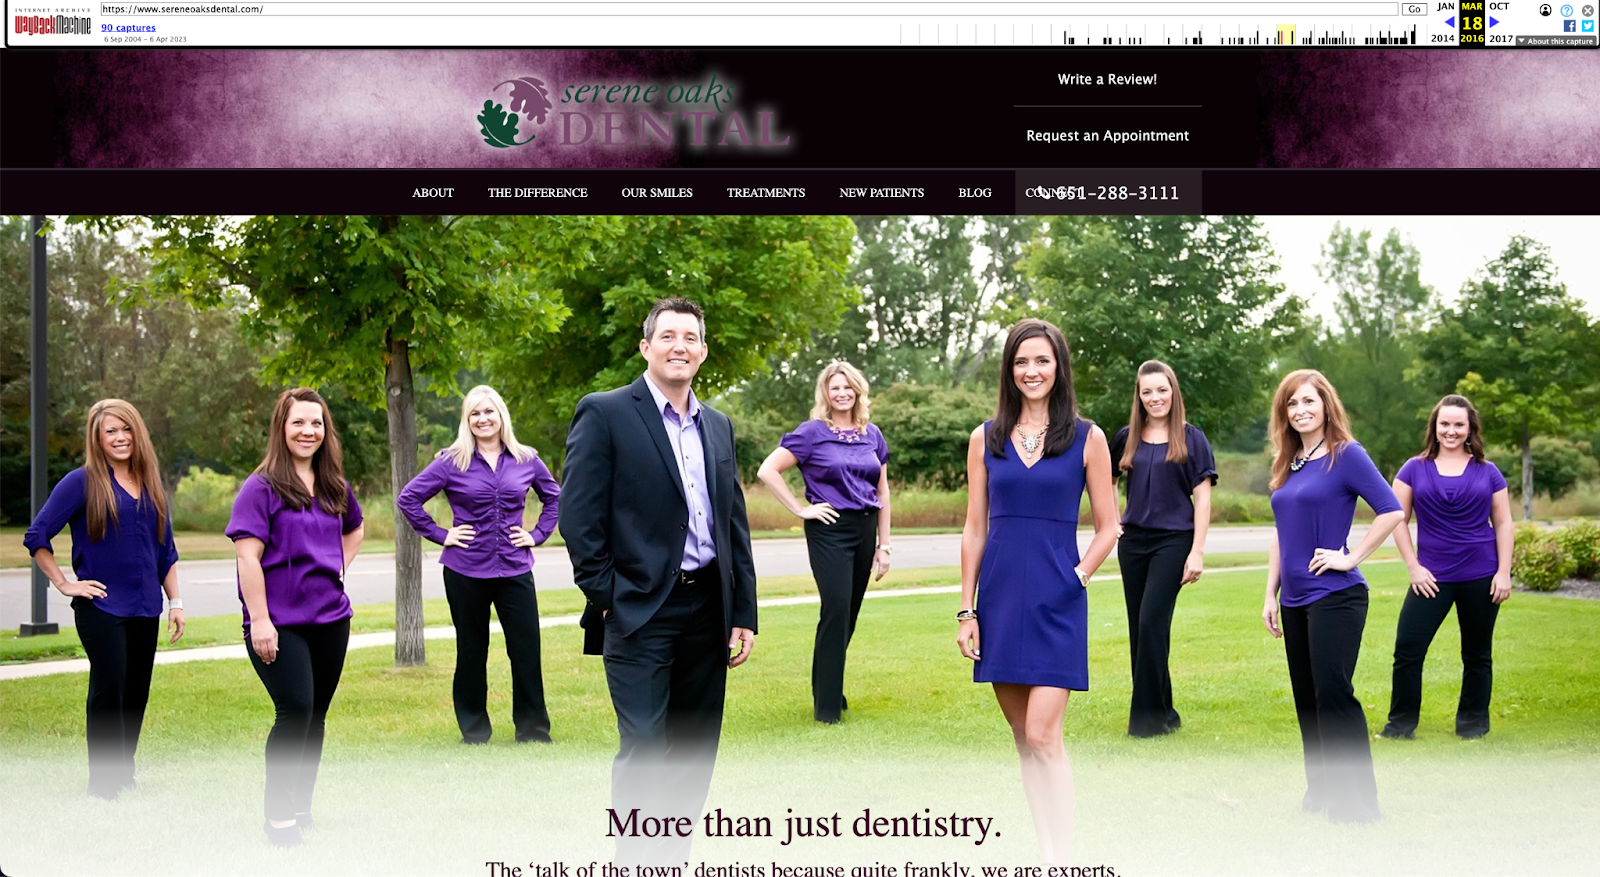 Web archive result of Serene Oaks Dental homepage